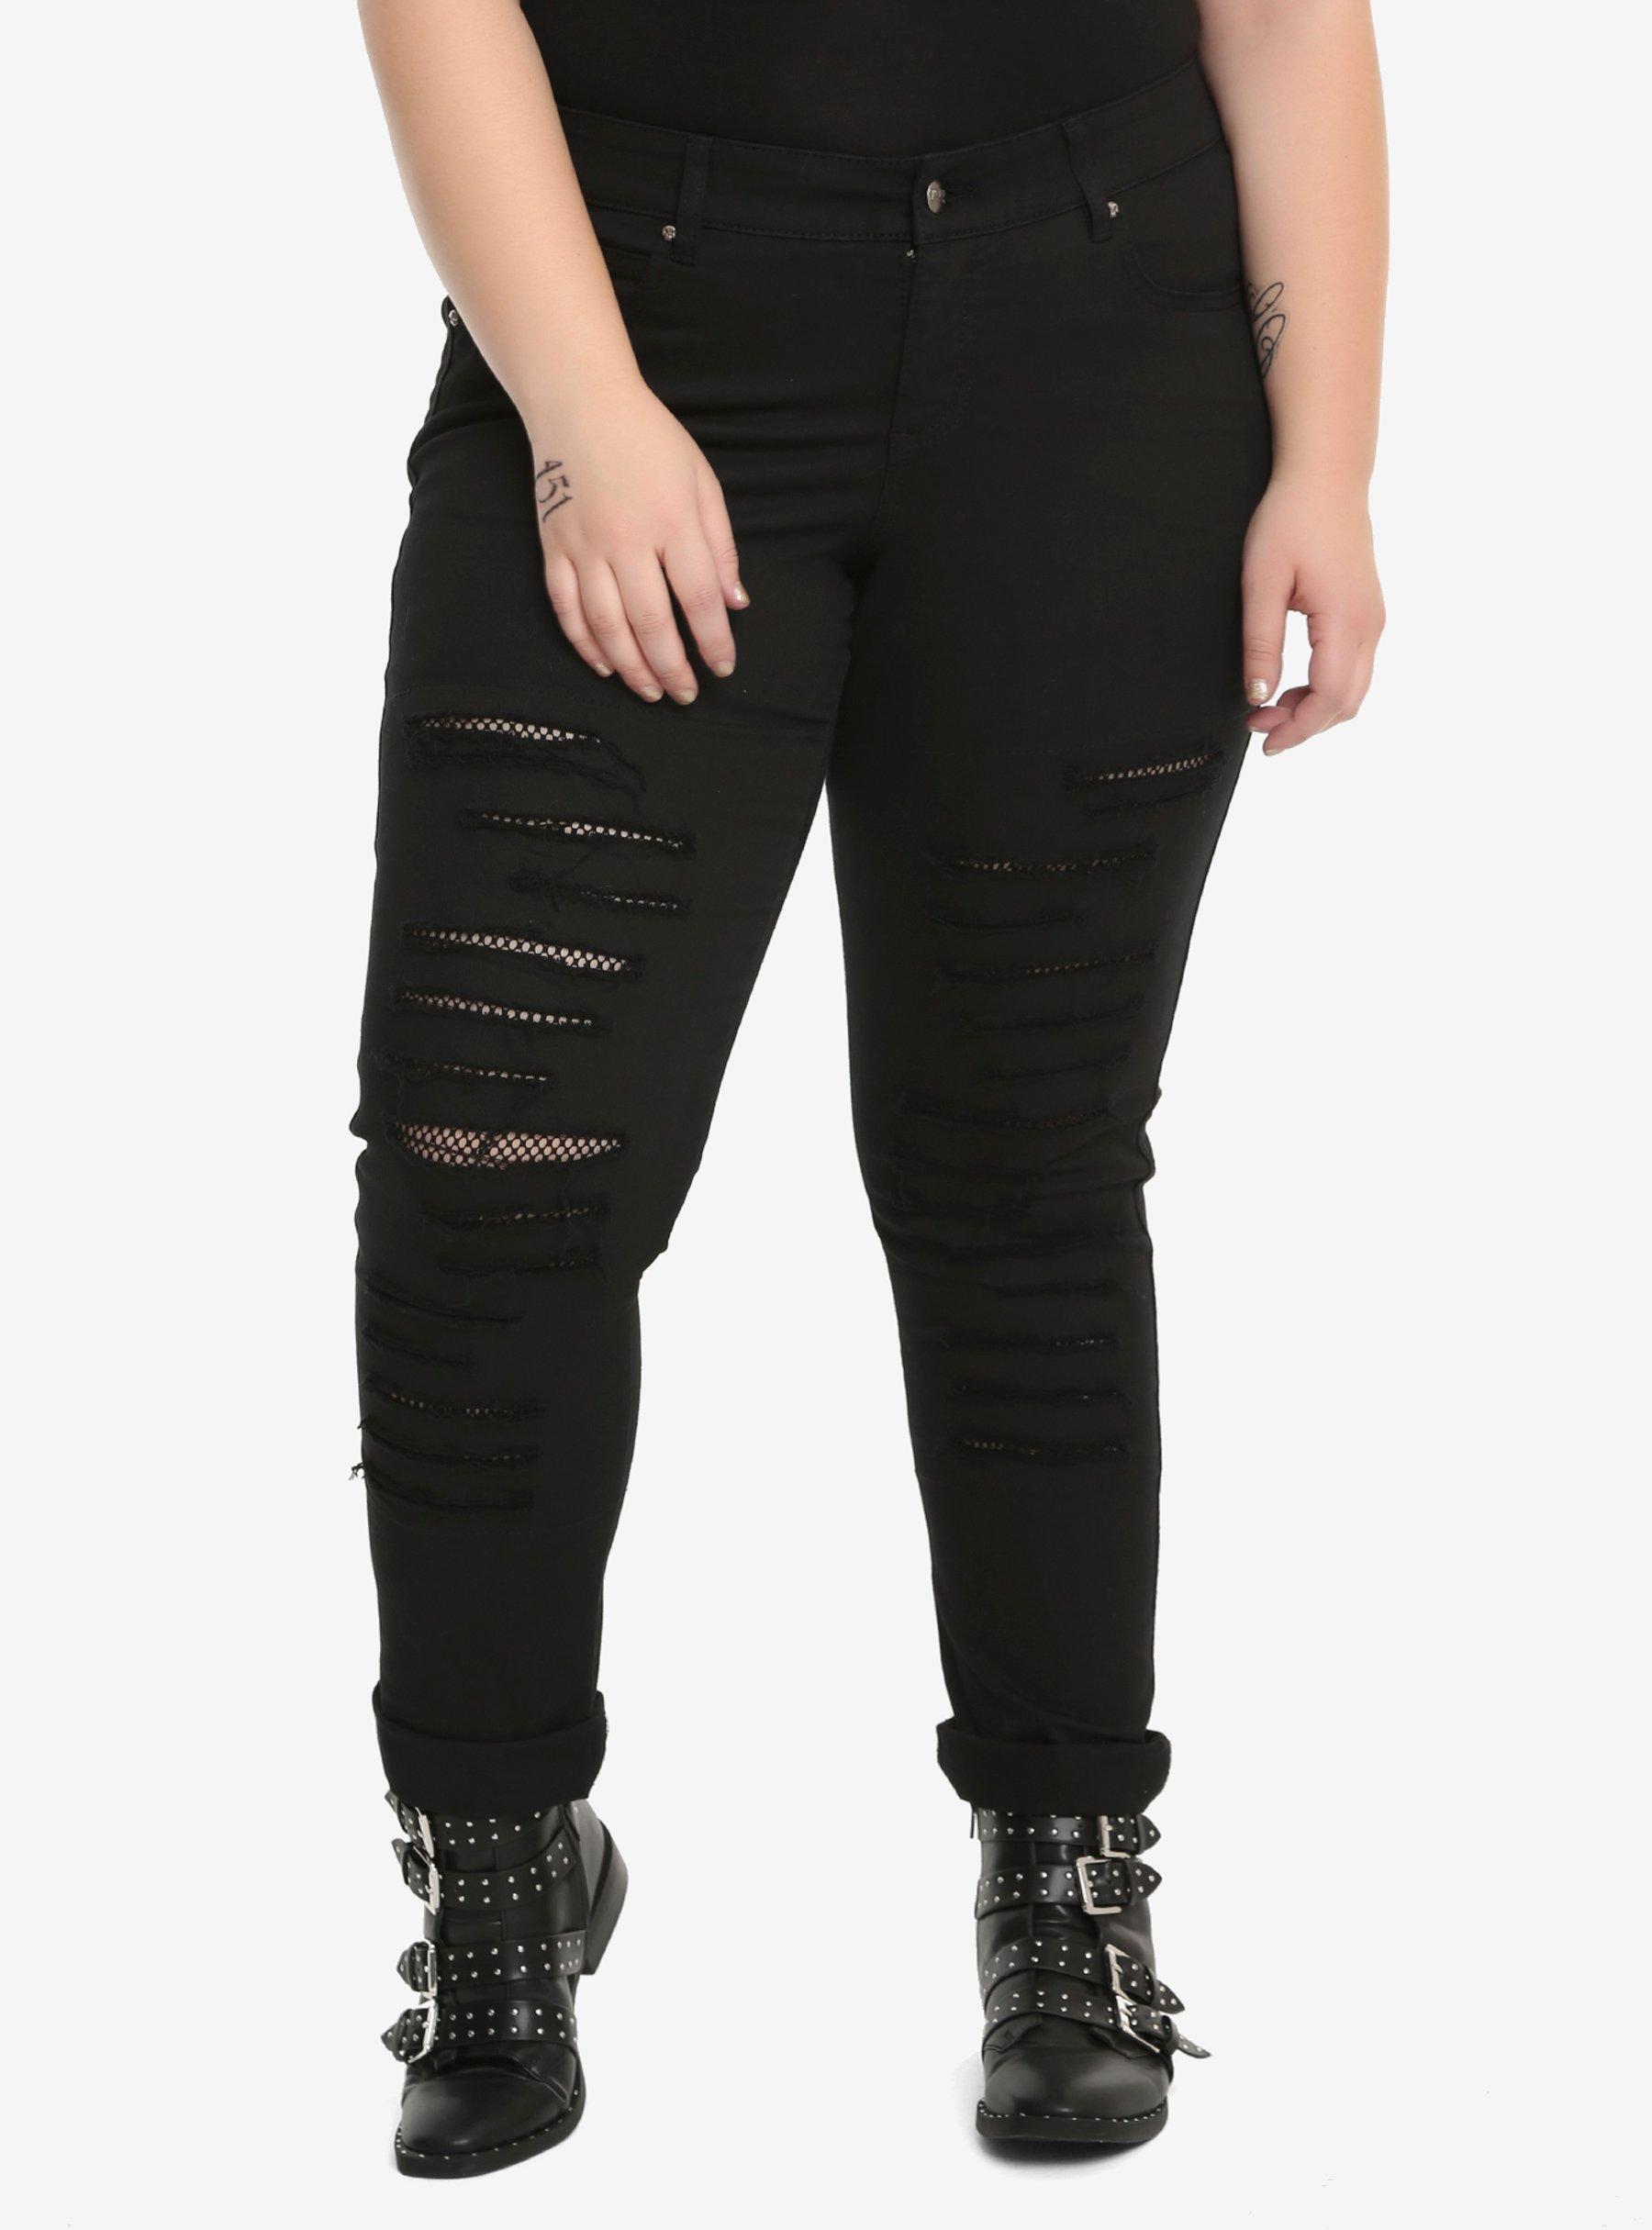 Royal Bones By Tripp Black Fishnet Skinny Jeans Plus Size, BLACK, hi-res